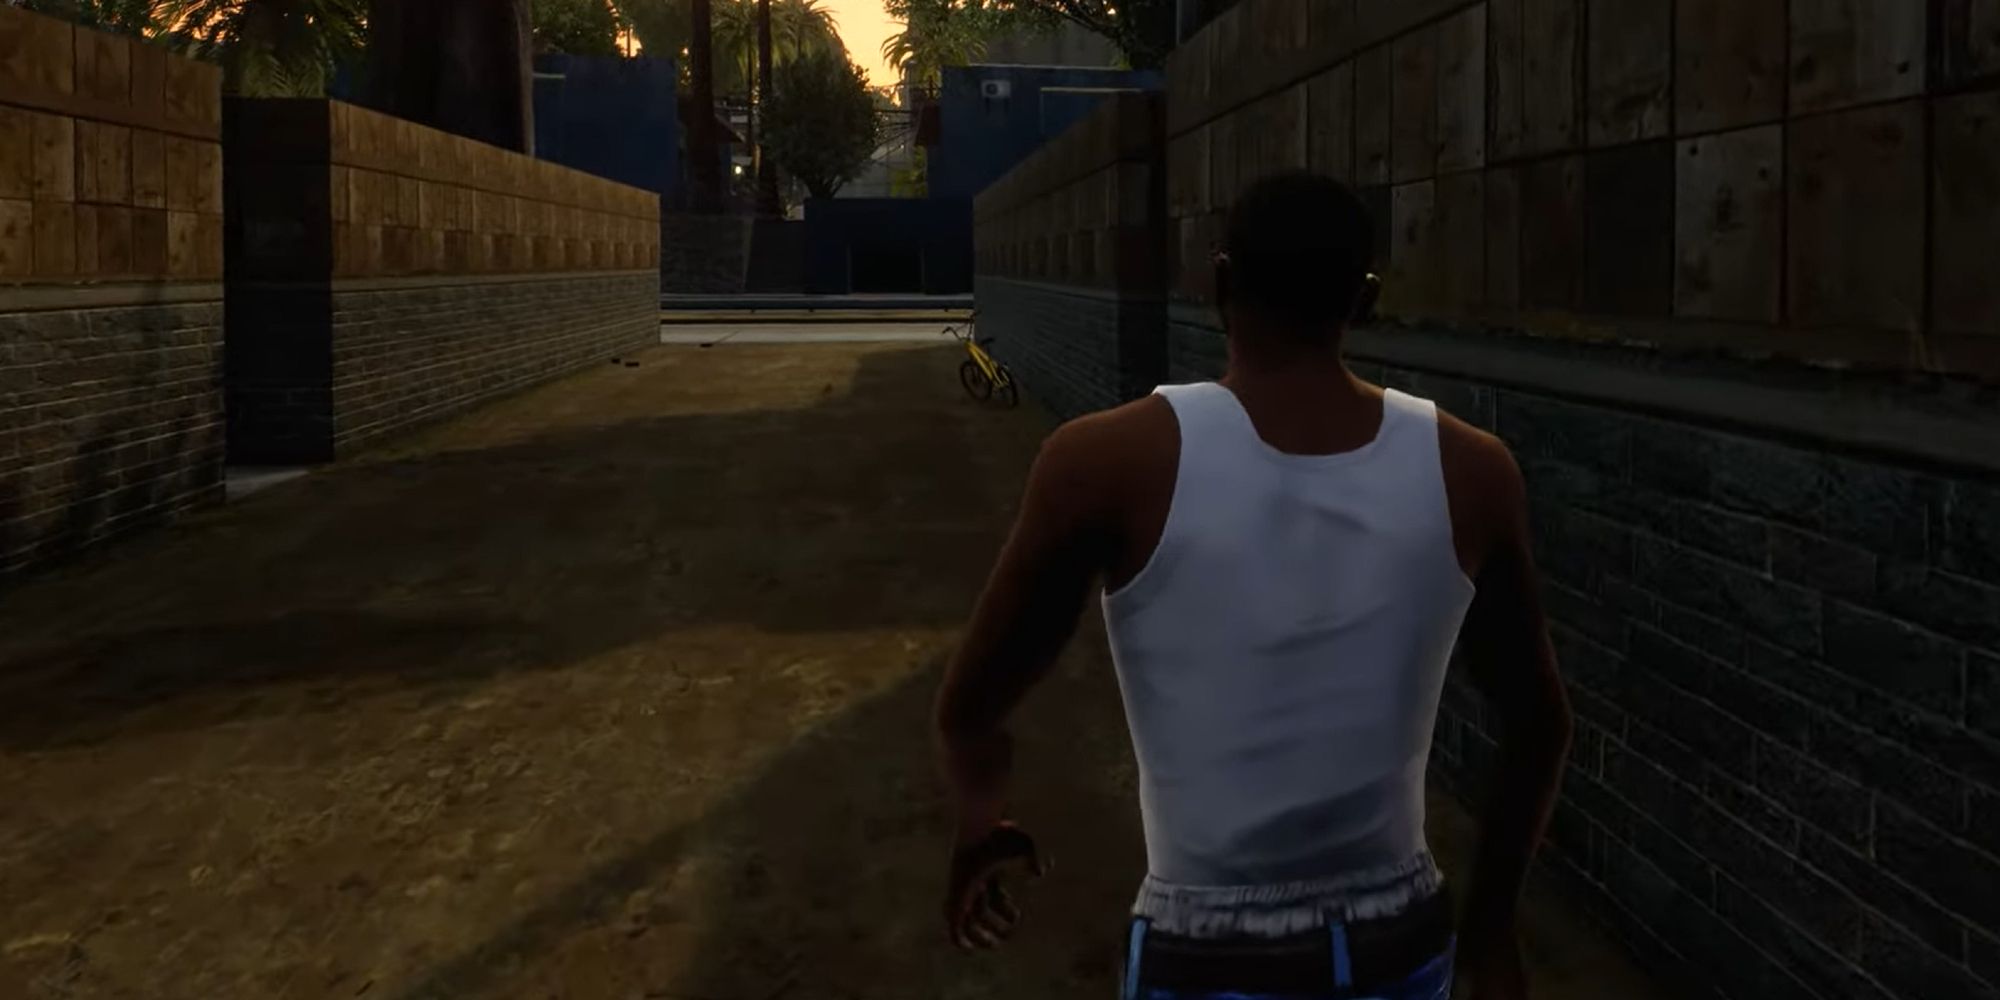 CJ walking down an alley